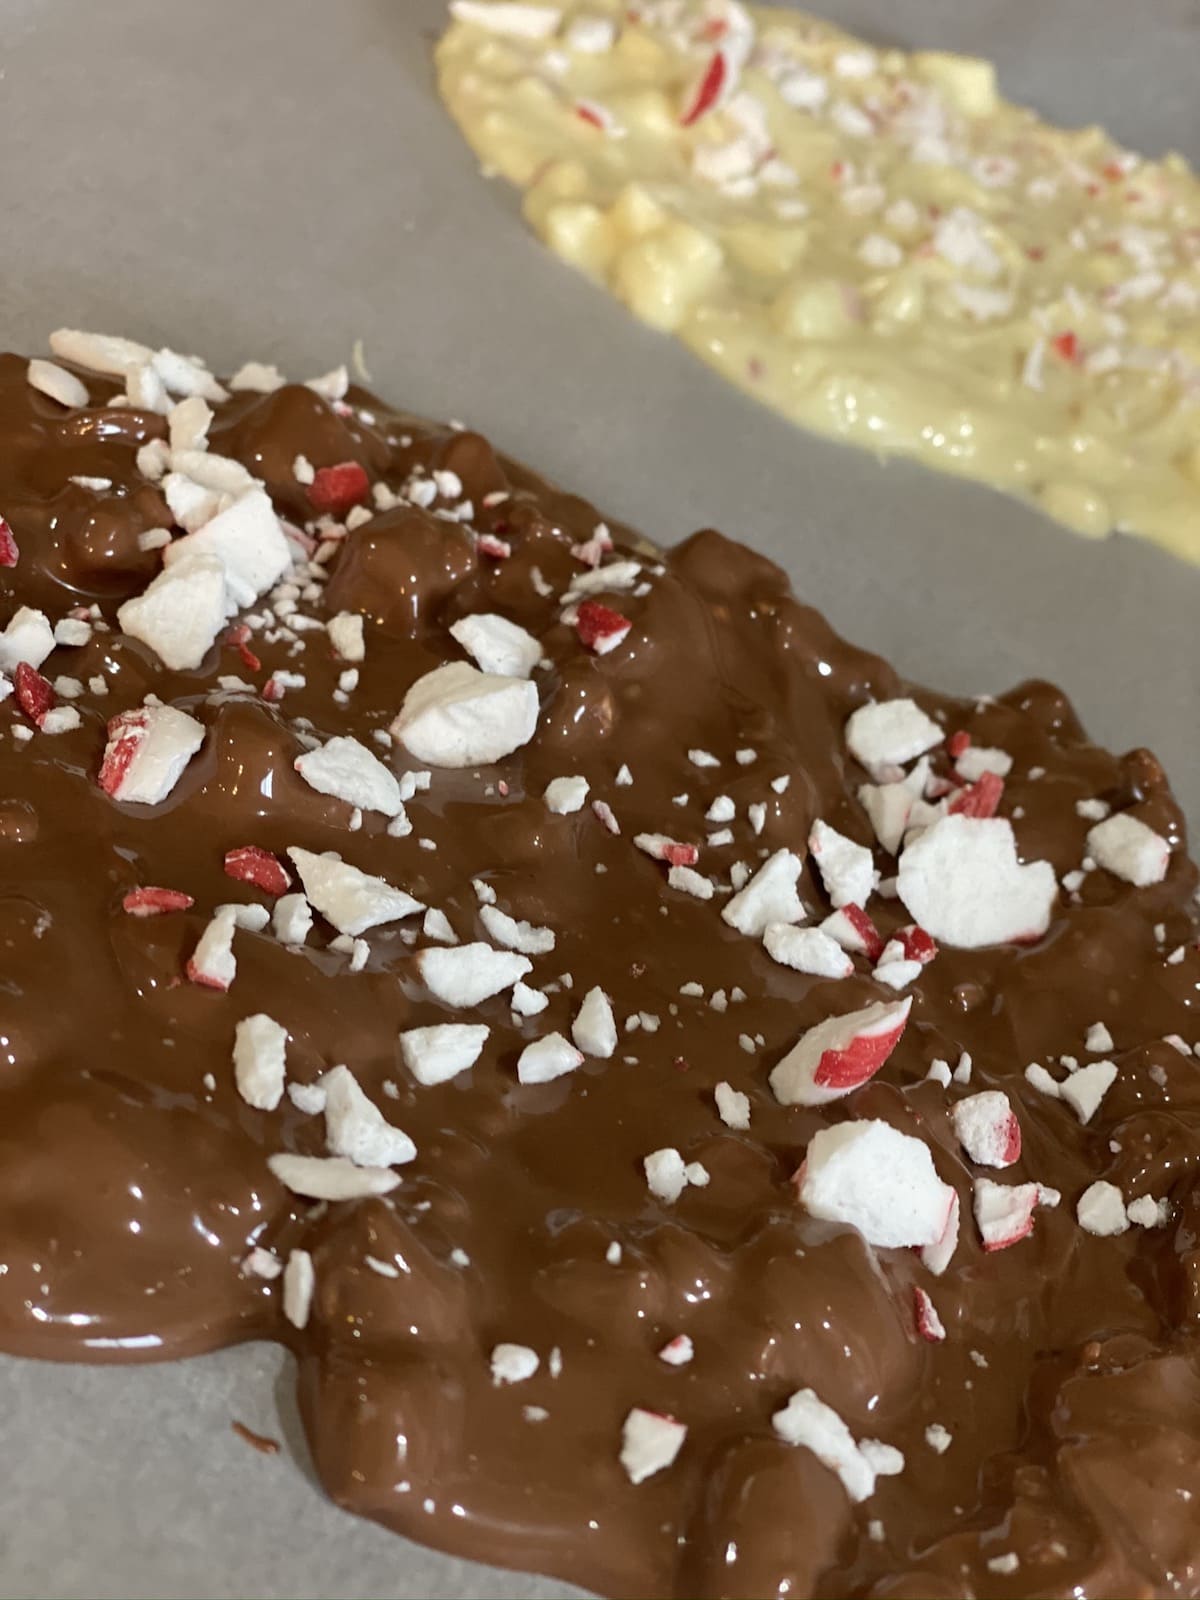 Holiday Recipe - Peppermint Bark Ice Cream Cheesecake